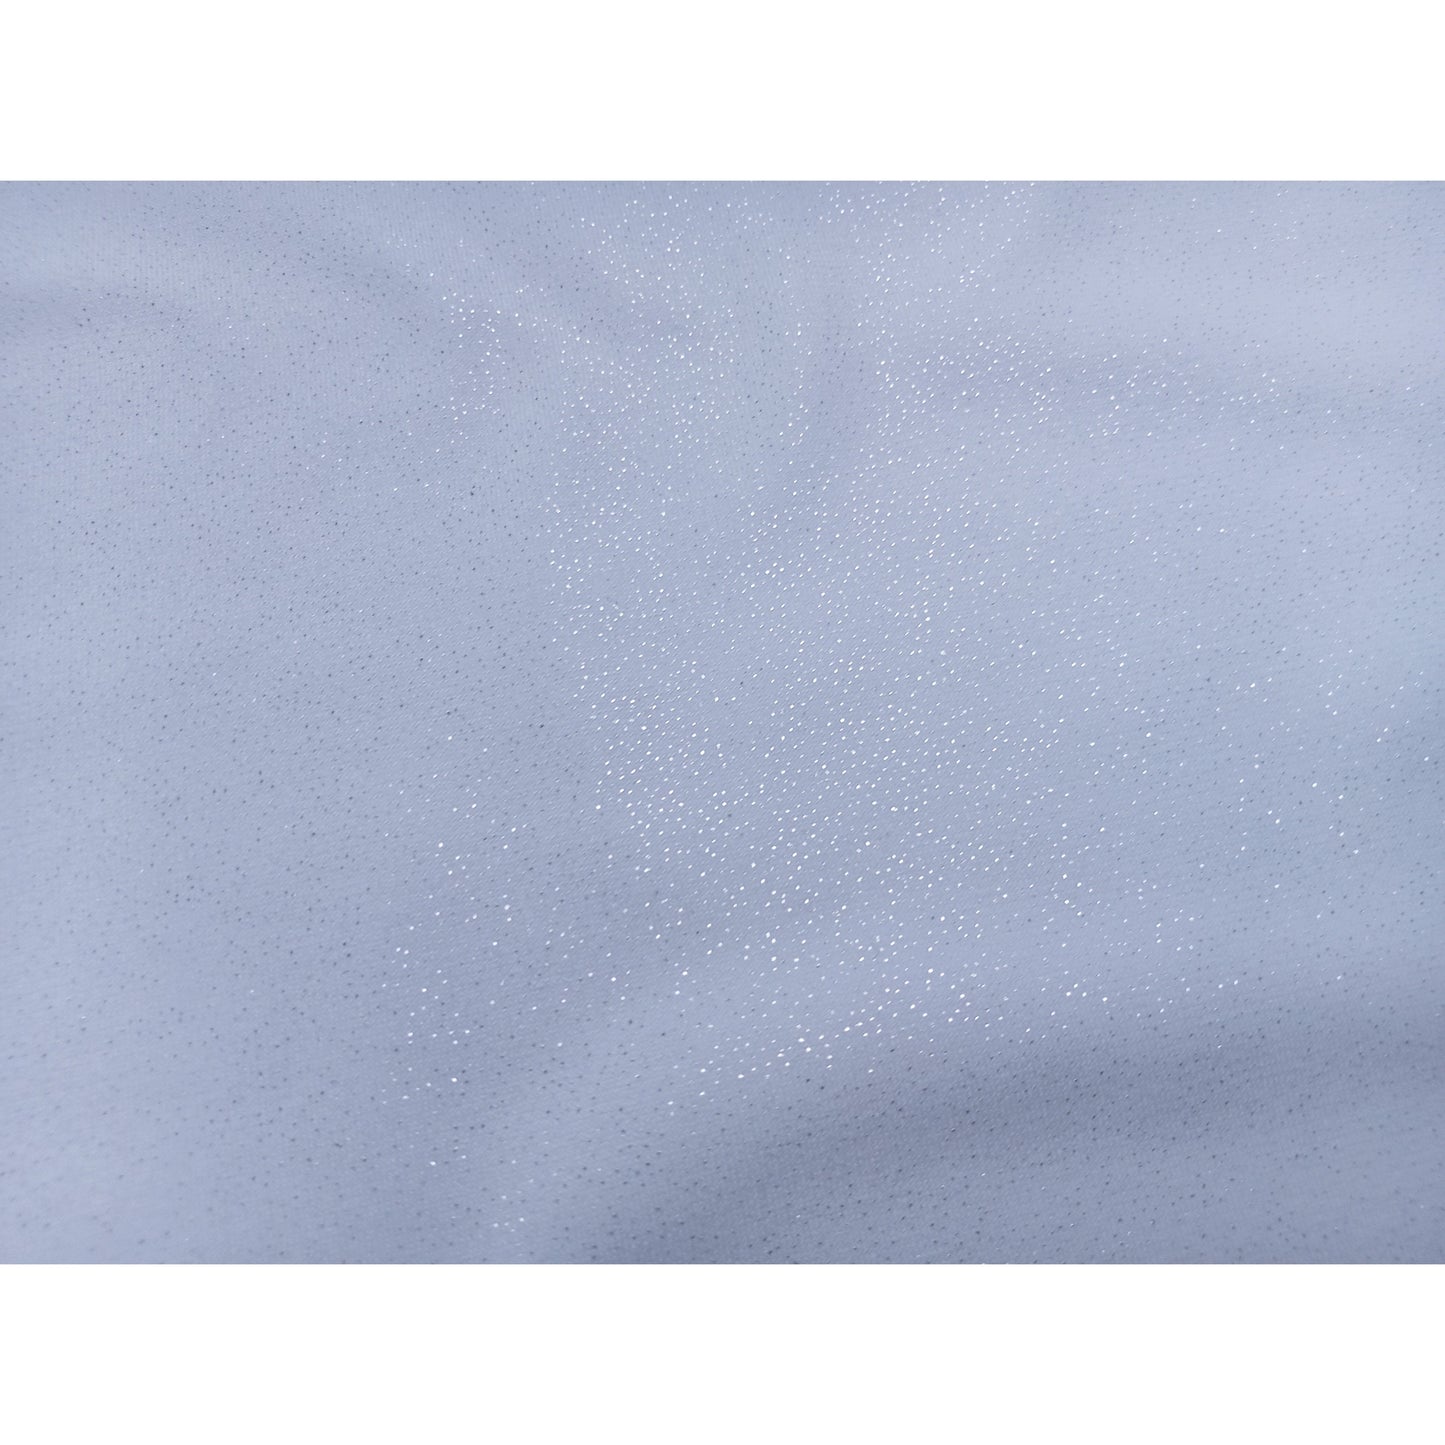 Capri-white silver foil jersey - sold by 1/2mtr